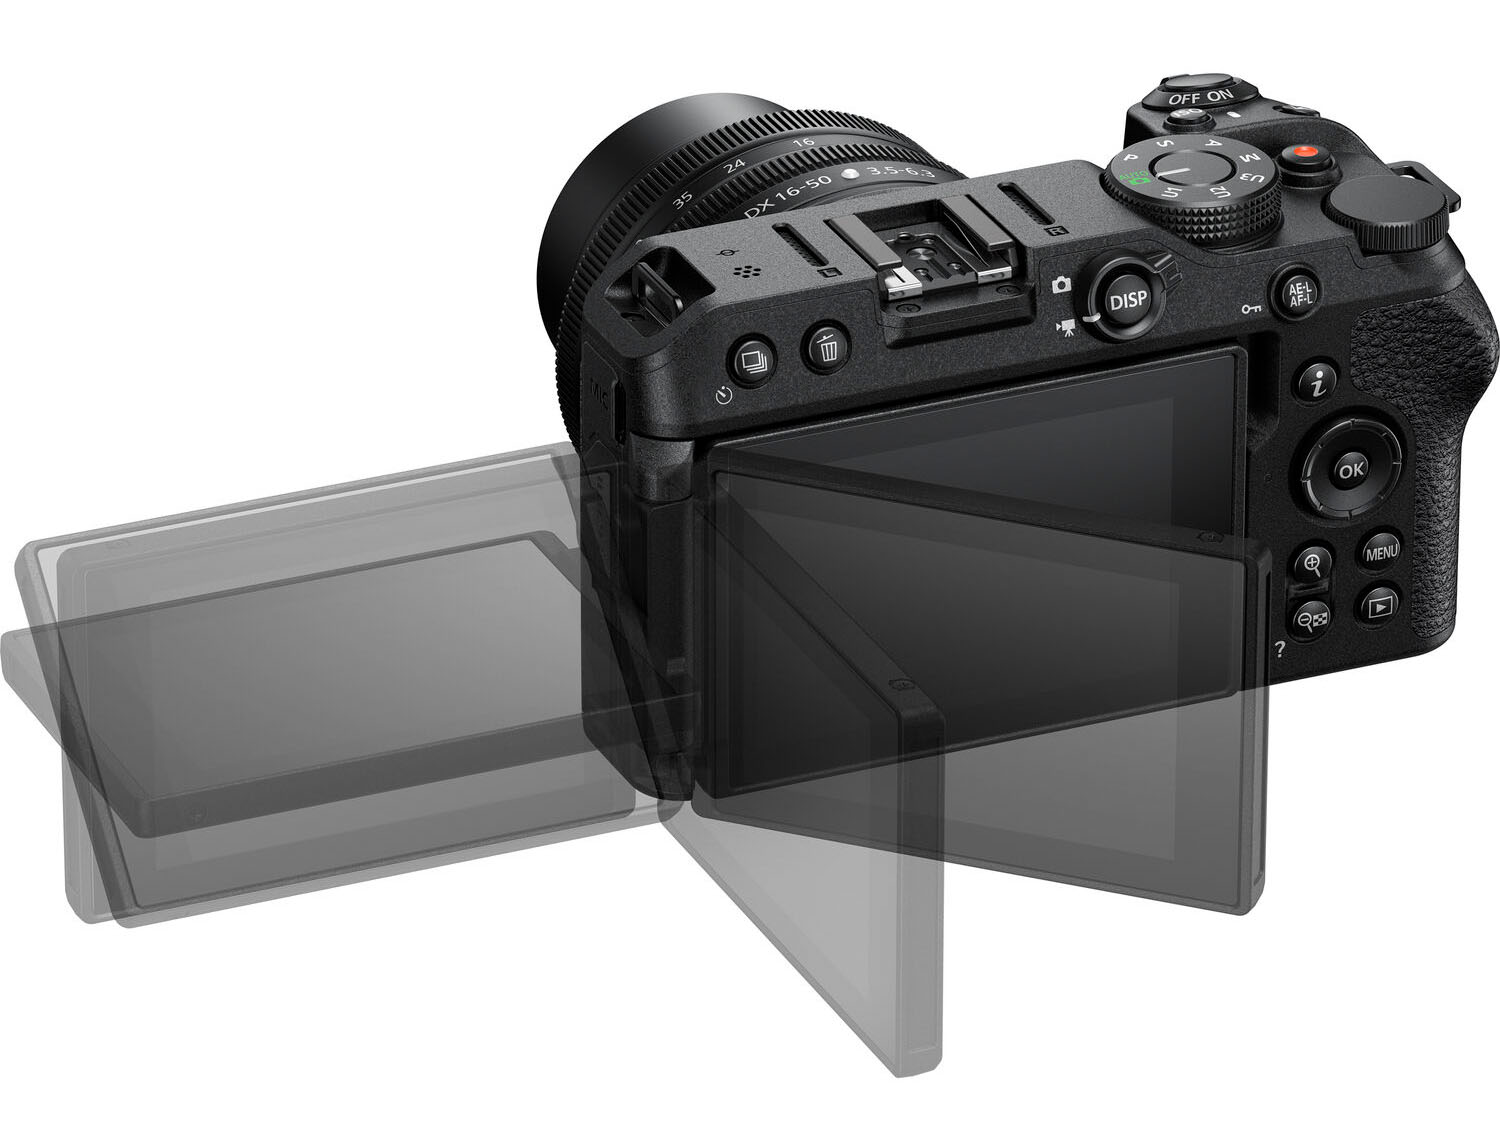 Nikon Z30 announced - Photo Review